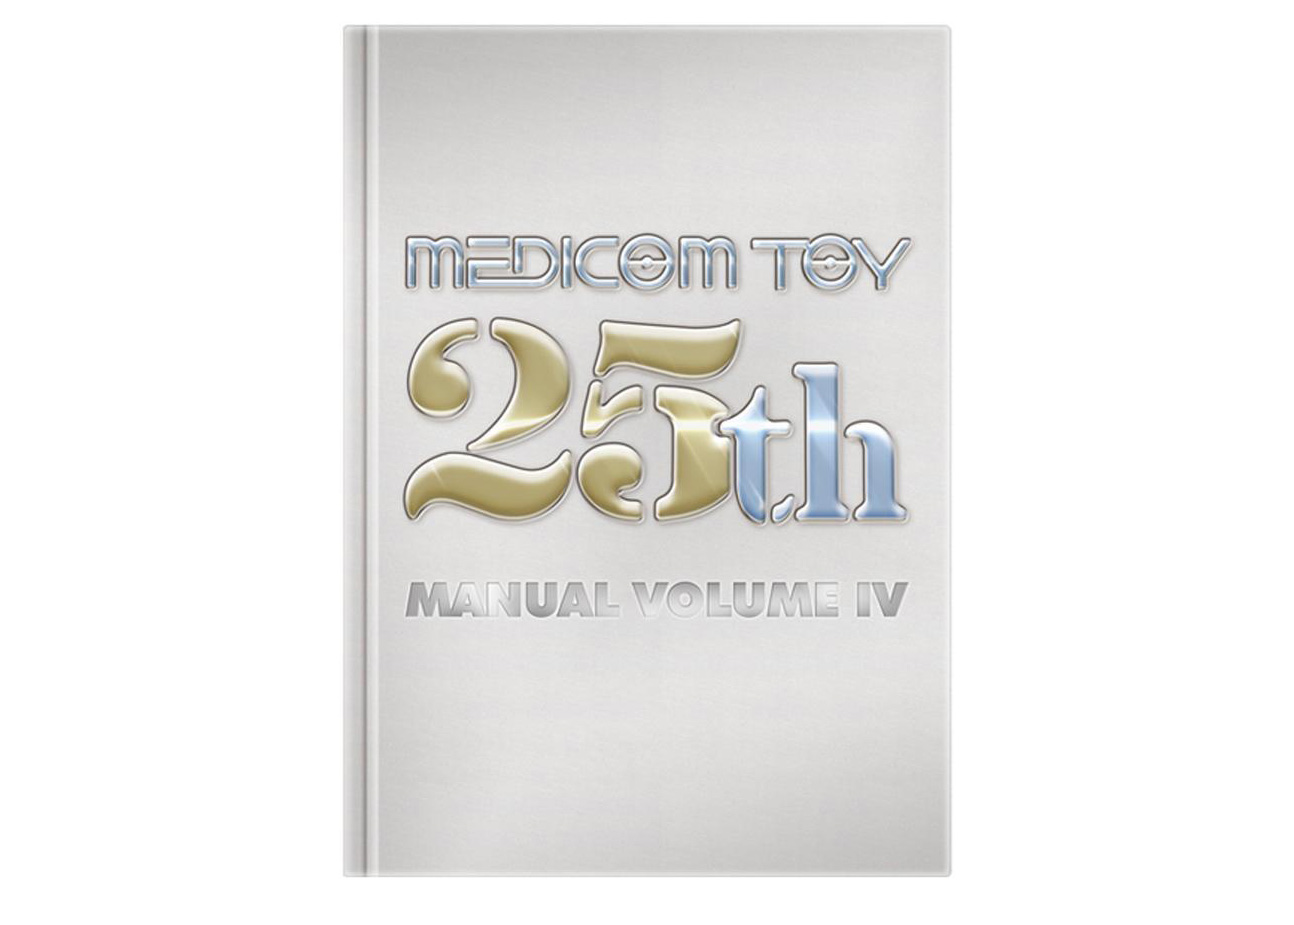 Medicom Toy 25th Anniversary Manual Volumn IV Book